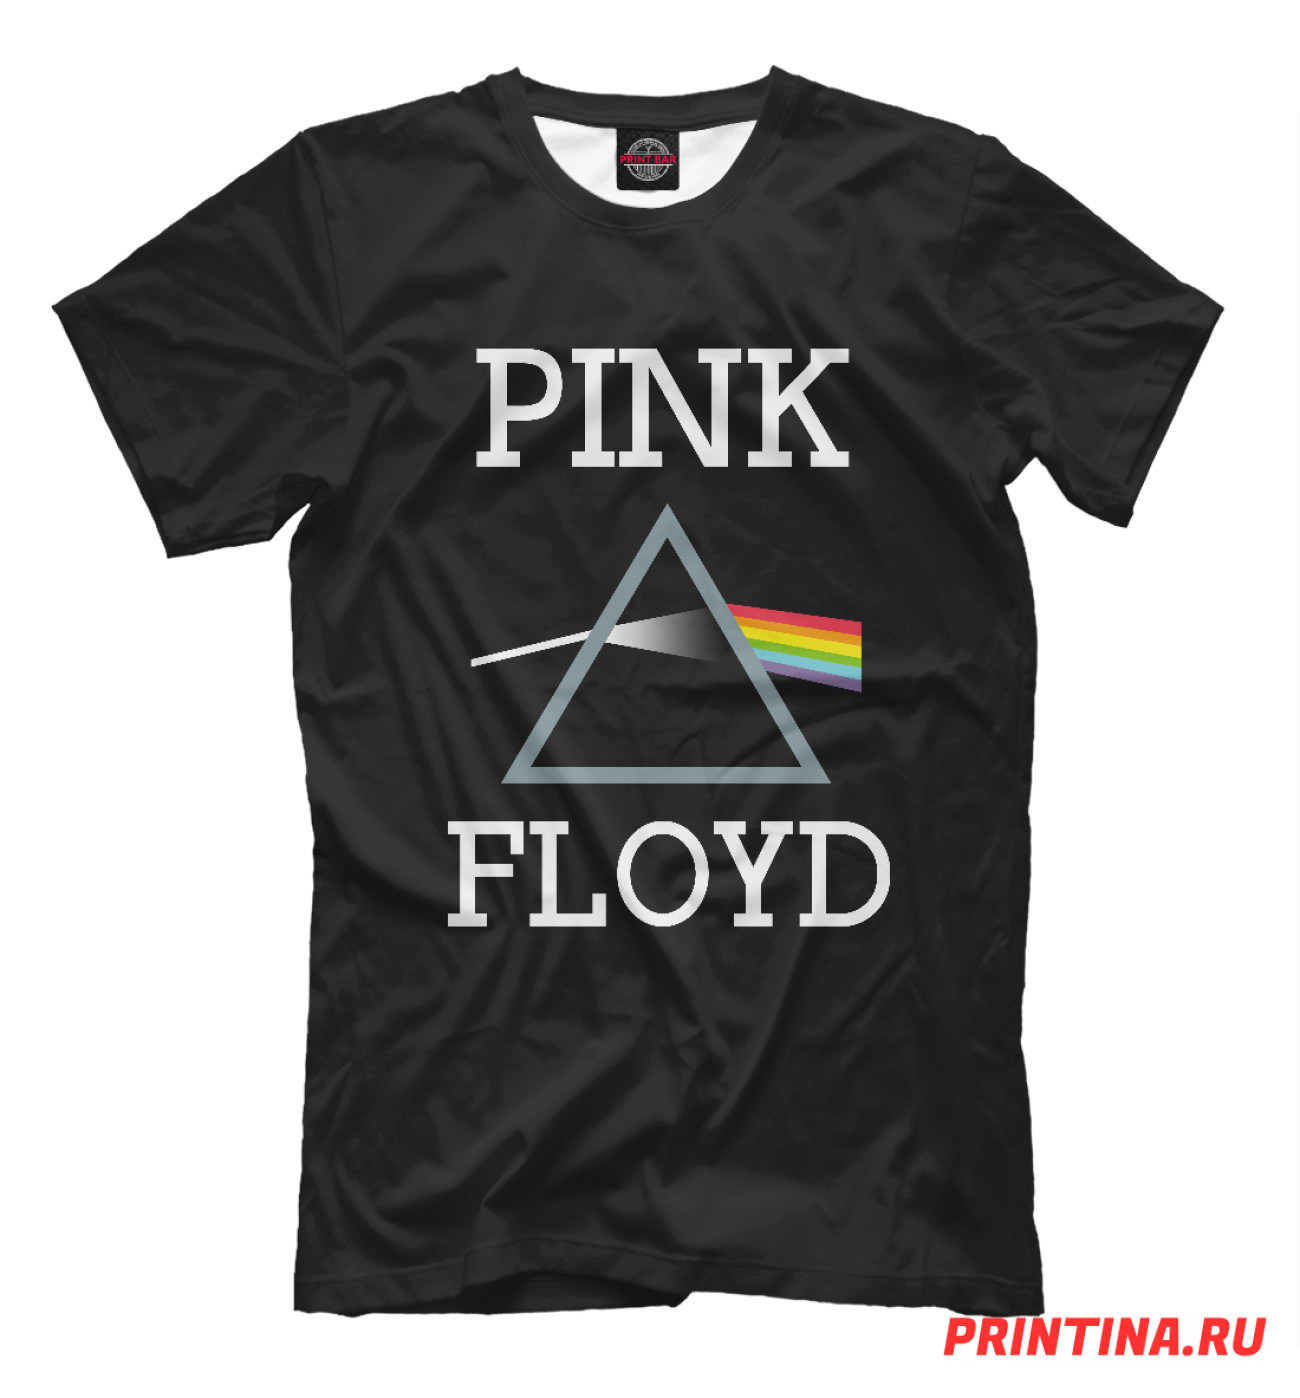 Мужская Футболка Pink Floyd, артикул: PFL-628919-fut-2